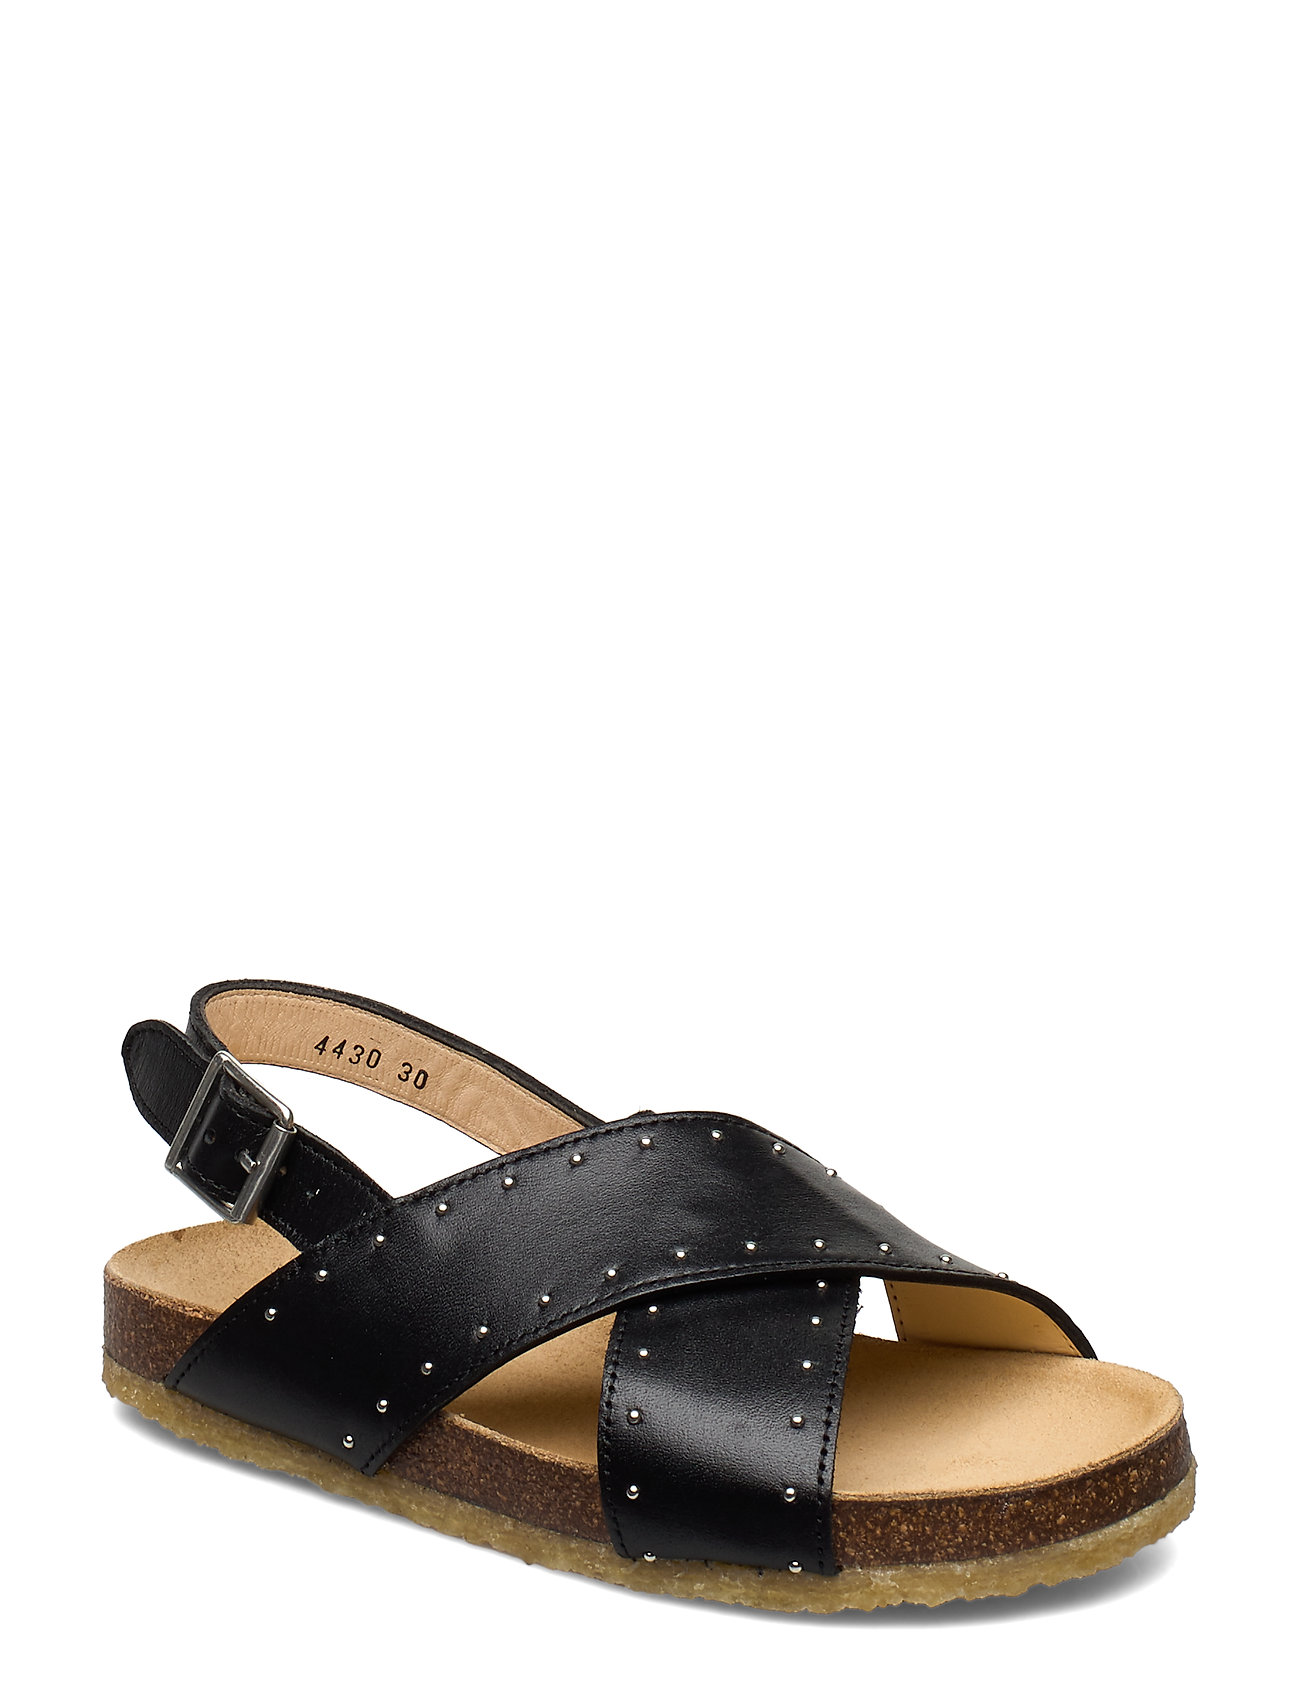 Sandals - Flat - Open Toe - Op Shoes Summer Shoes Sandals Musta ANGULUS